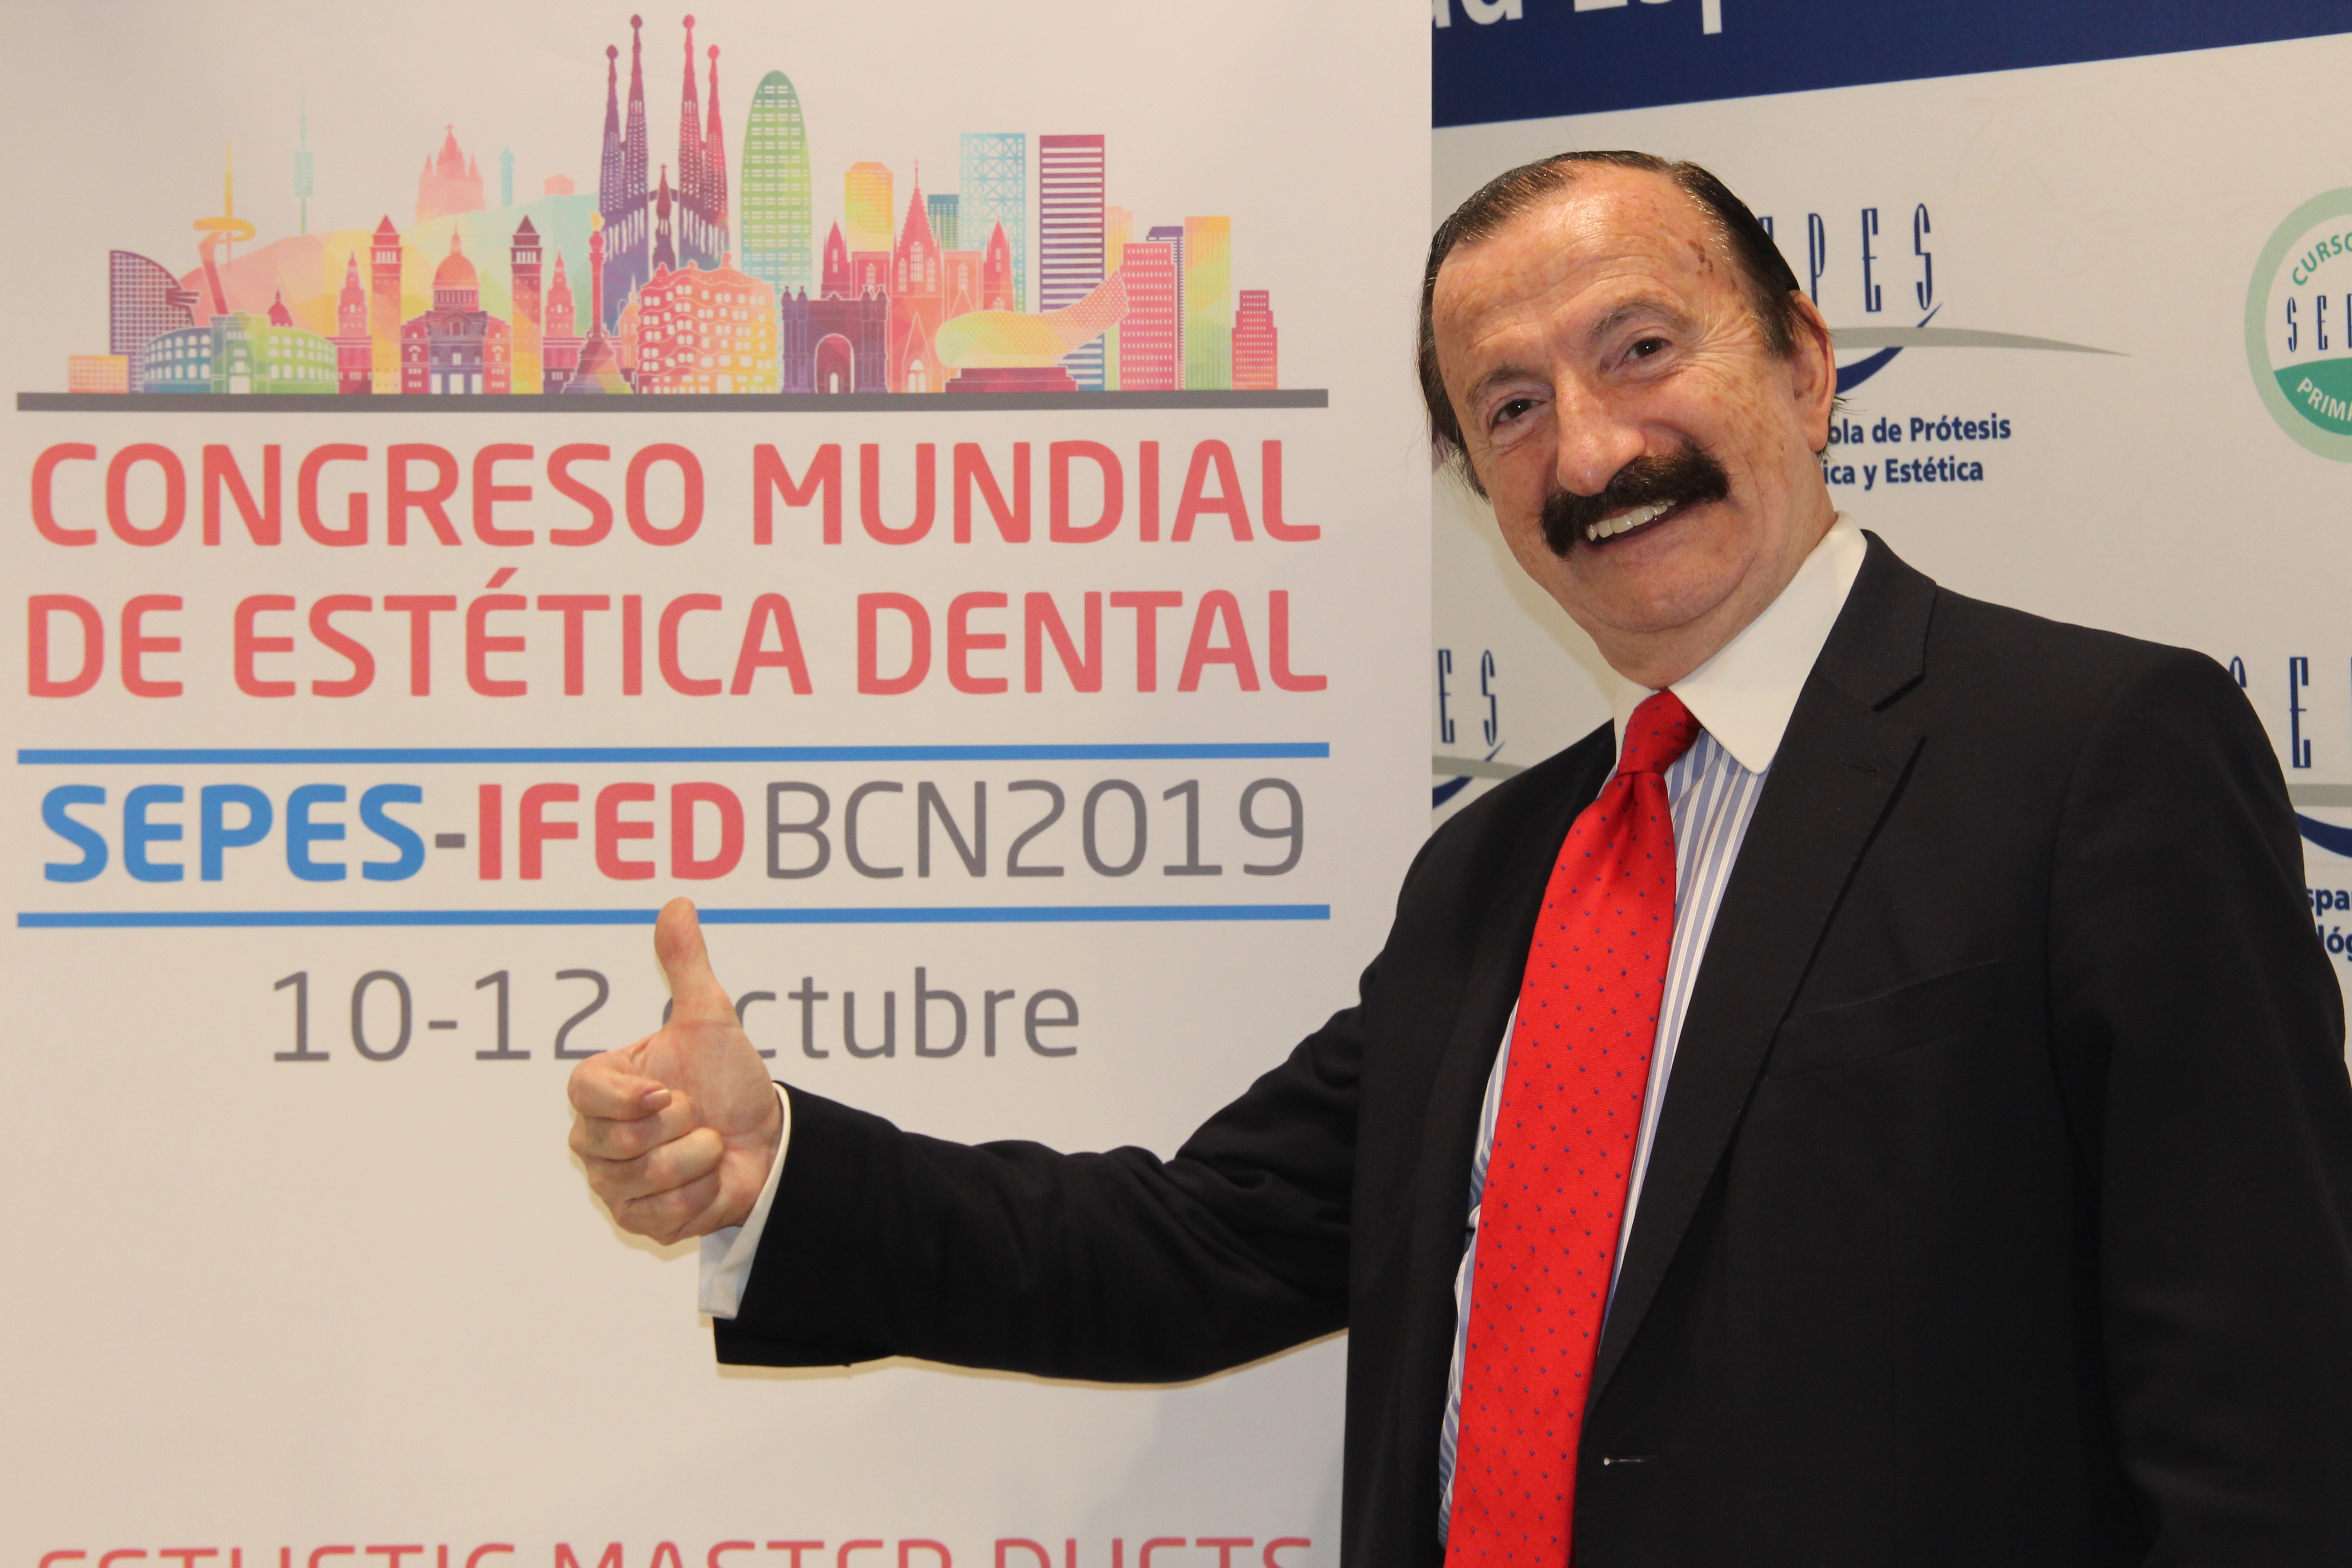 Dr. Jaime A. Gil, presidente de Ifed y copresidente del Congreso Mundial de Estética Dental Sepes-Ifed 2019.